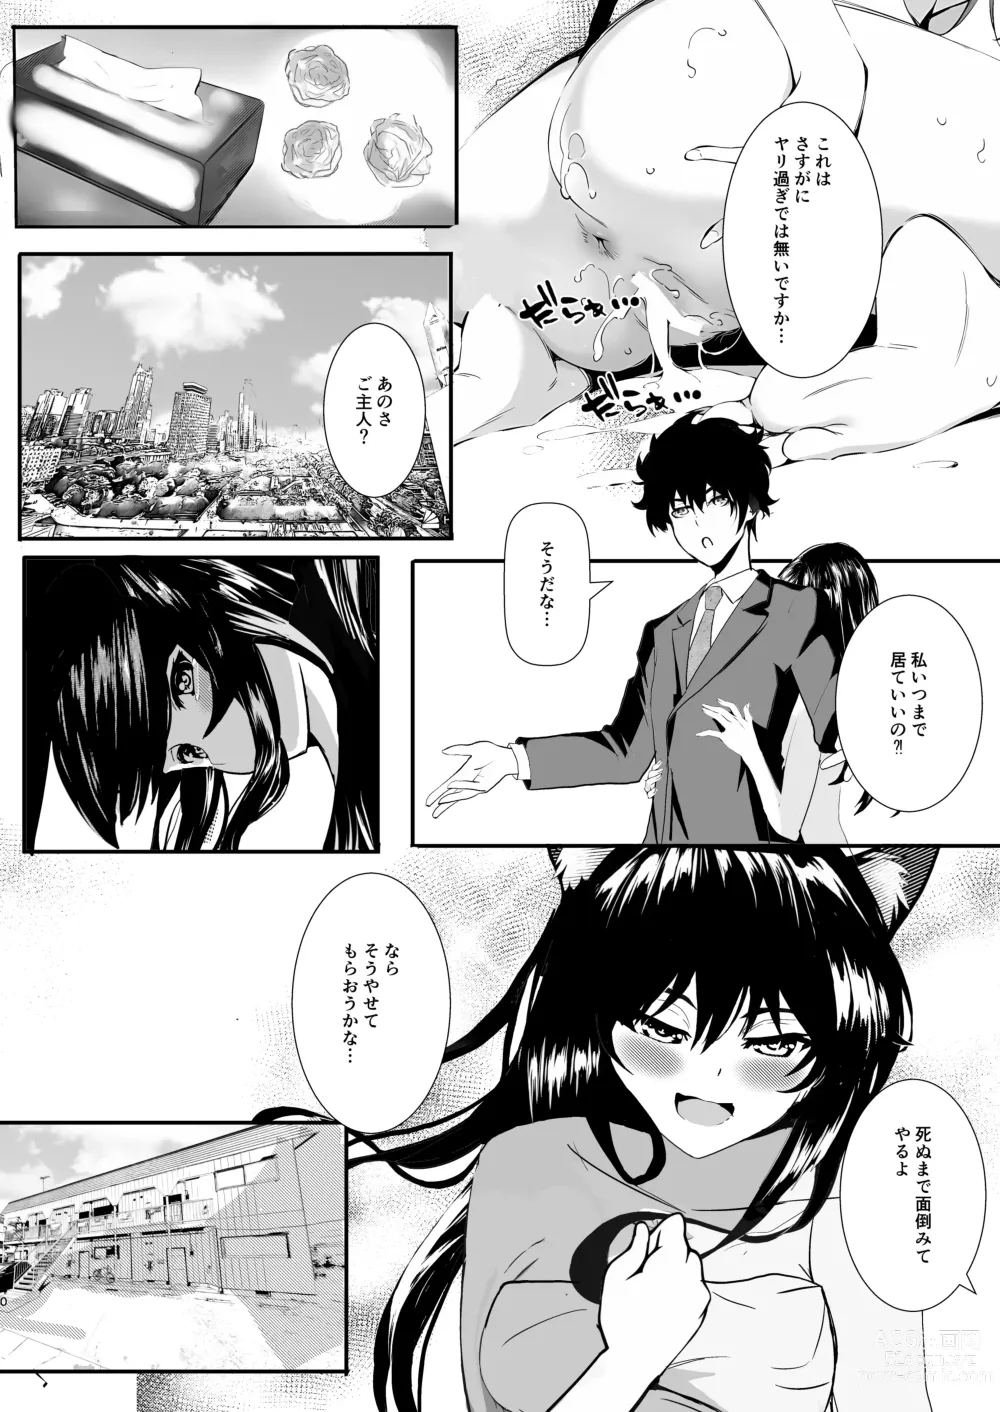 Page 41 of manga Pet na Kanojo